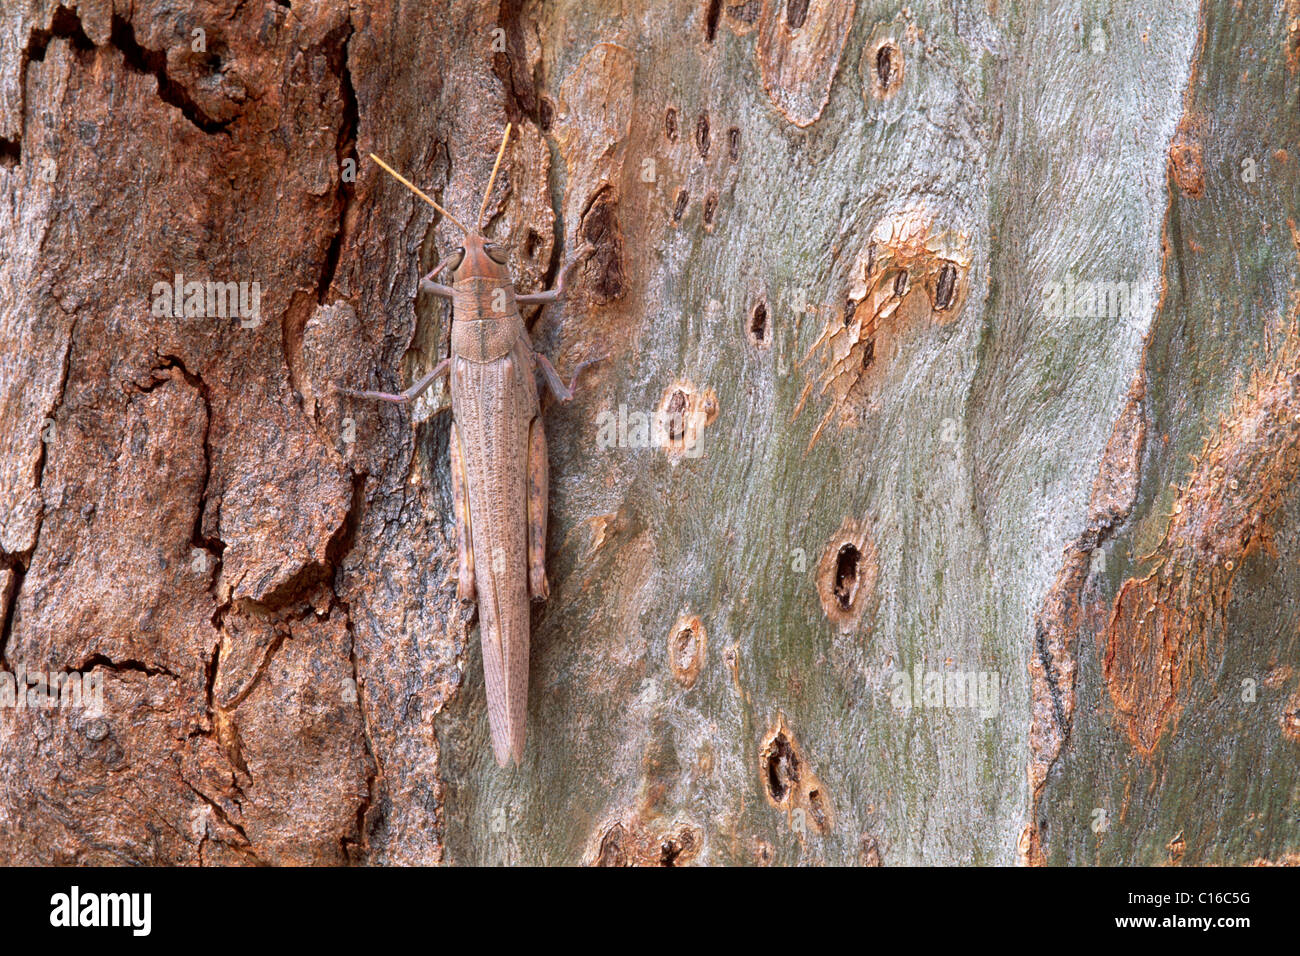 Grasshopper (Saltatoria) sitting camouflaged on the bark of a Eucalyptus Tree (Eucalyptus), Northern Territory, Australia Stock Photo